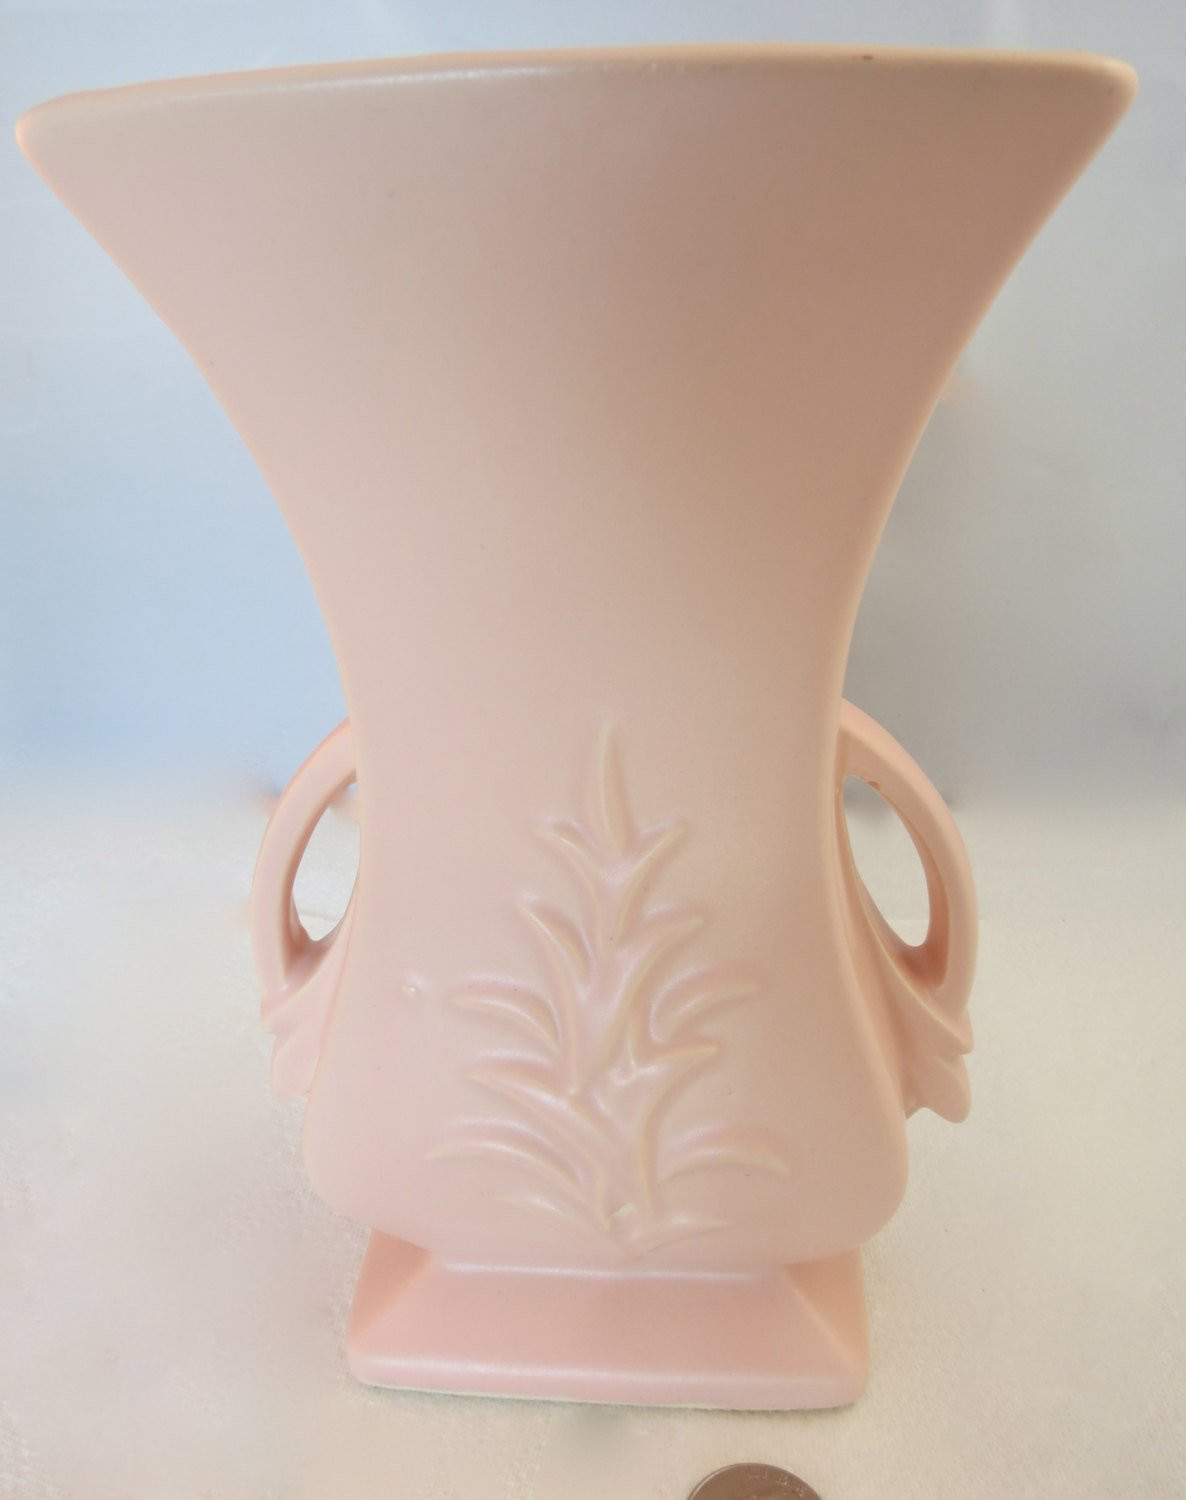 Mccoy Pottery Flower Vases Of Vintage Mccoy Classic Large Urn Vase with Handles Etsy Throughout Dzoom